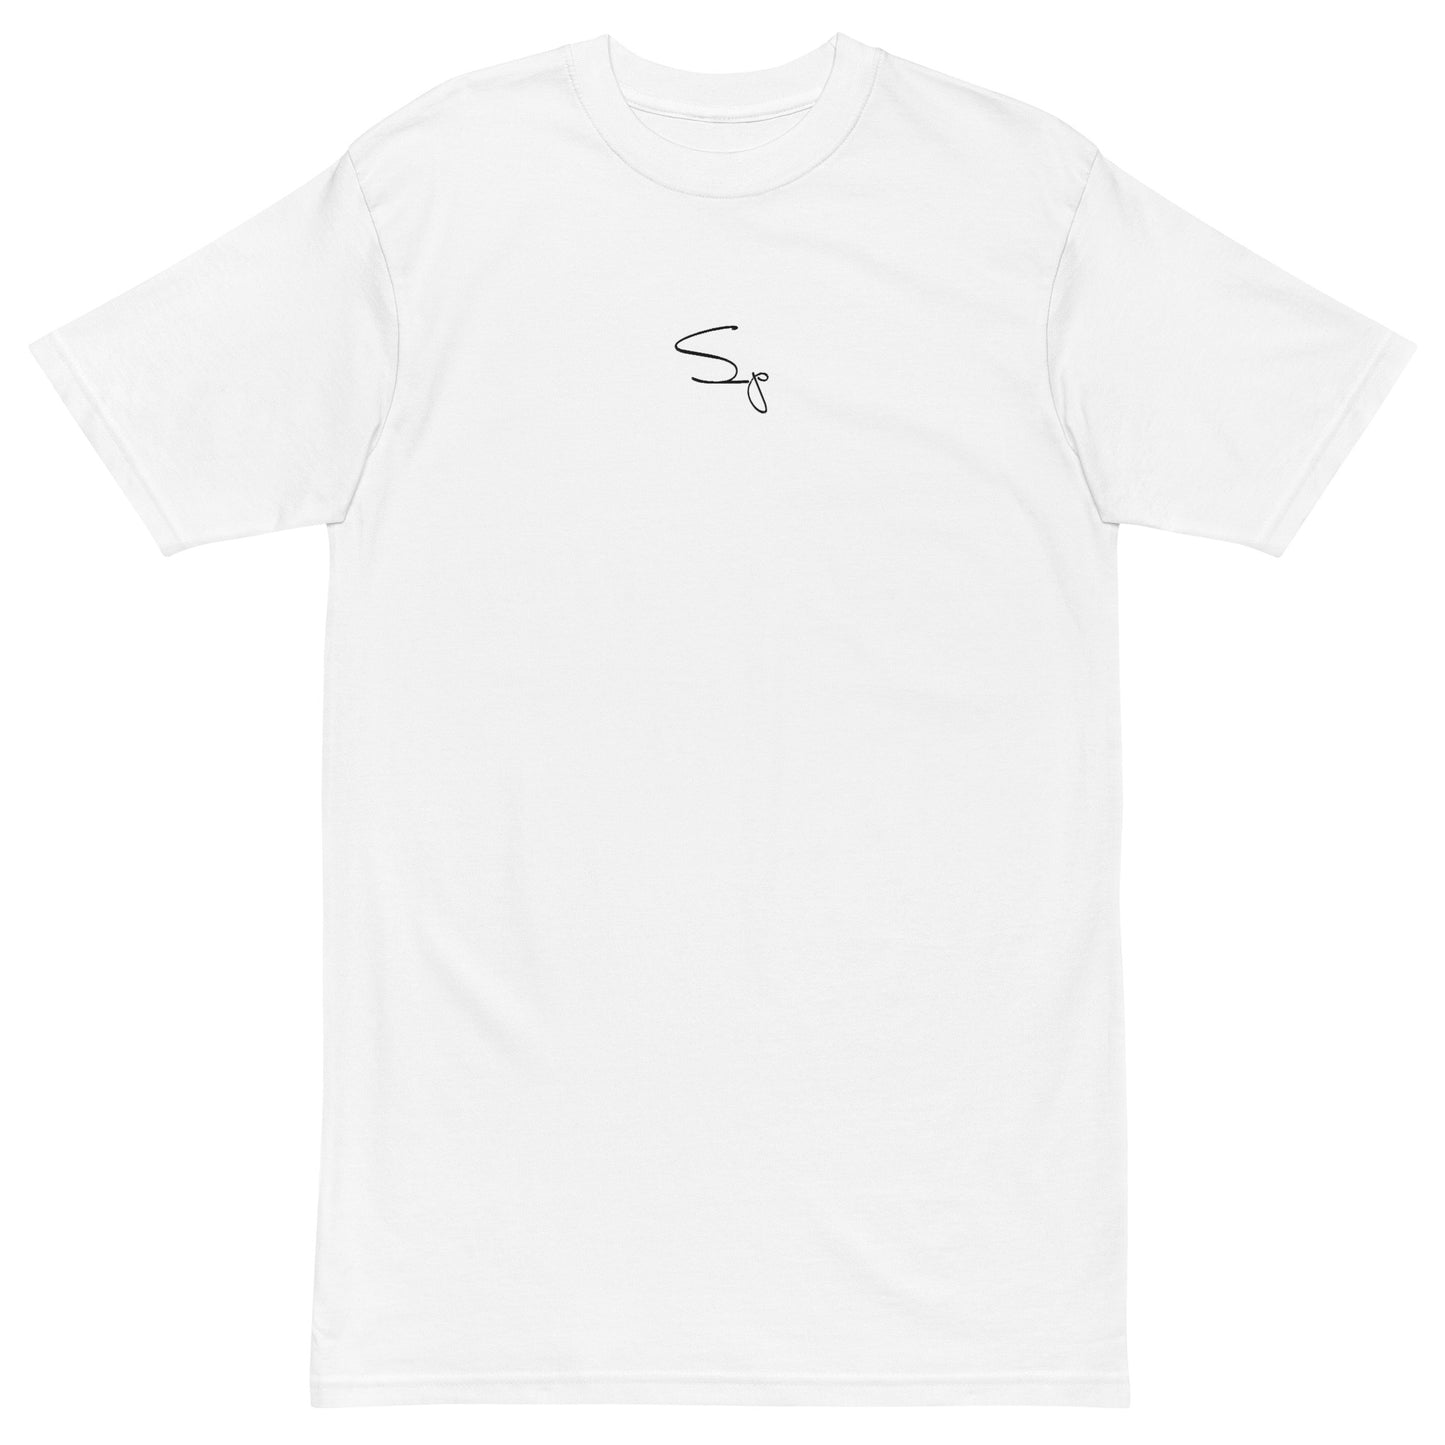 SP T-Shirt White